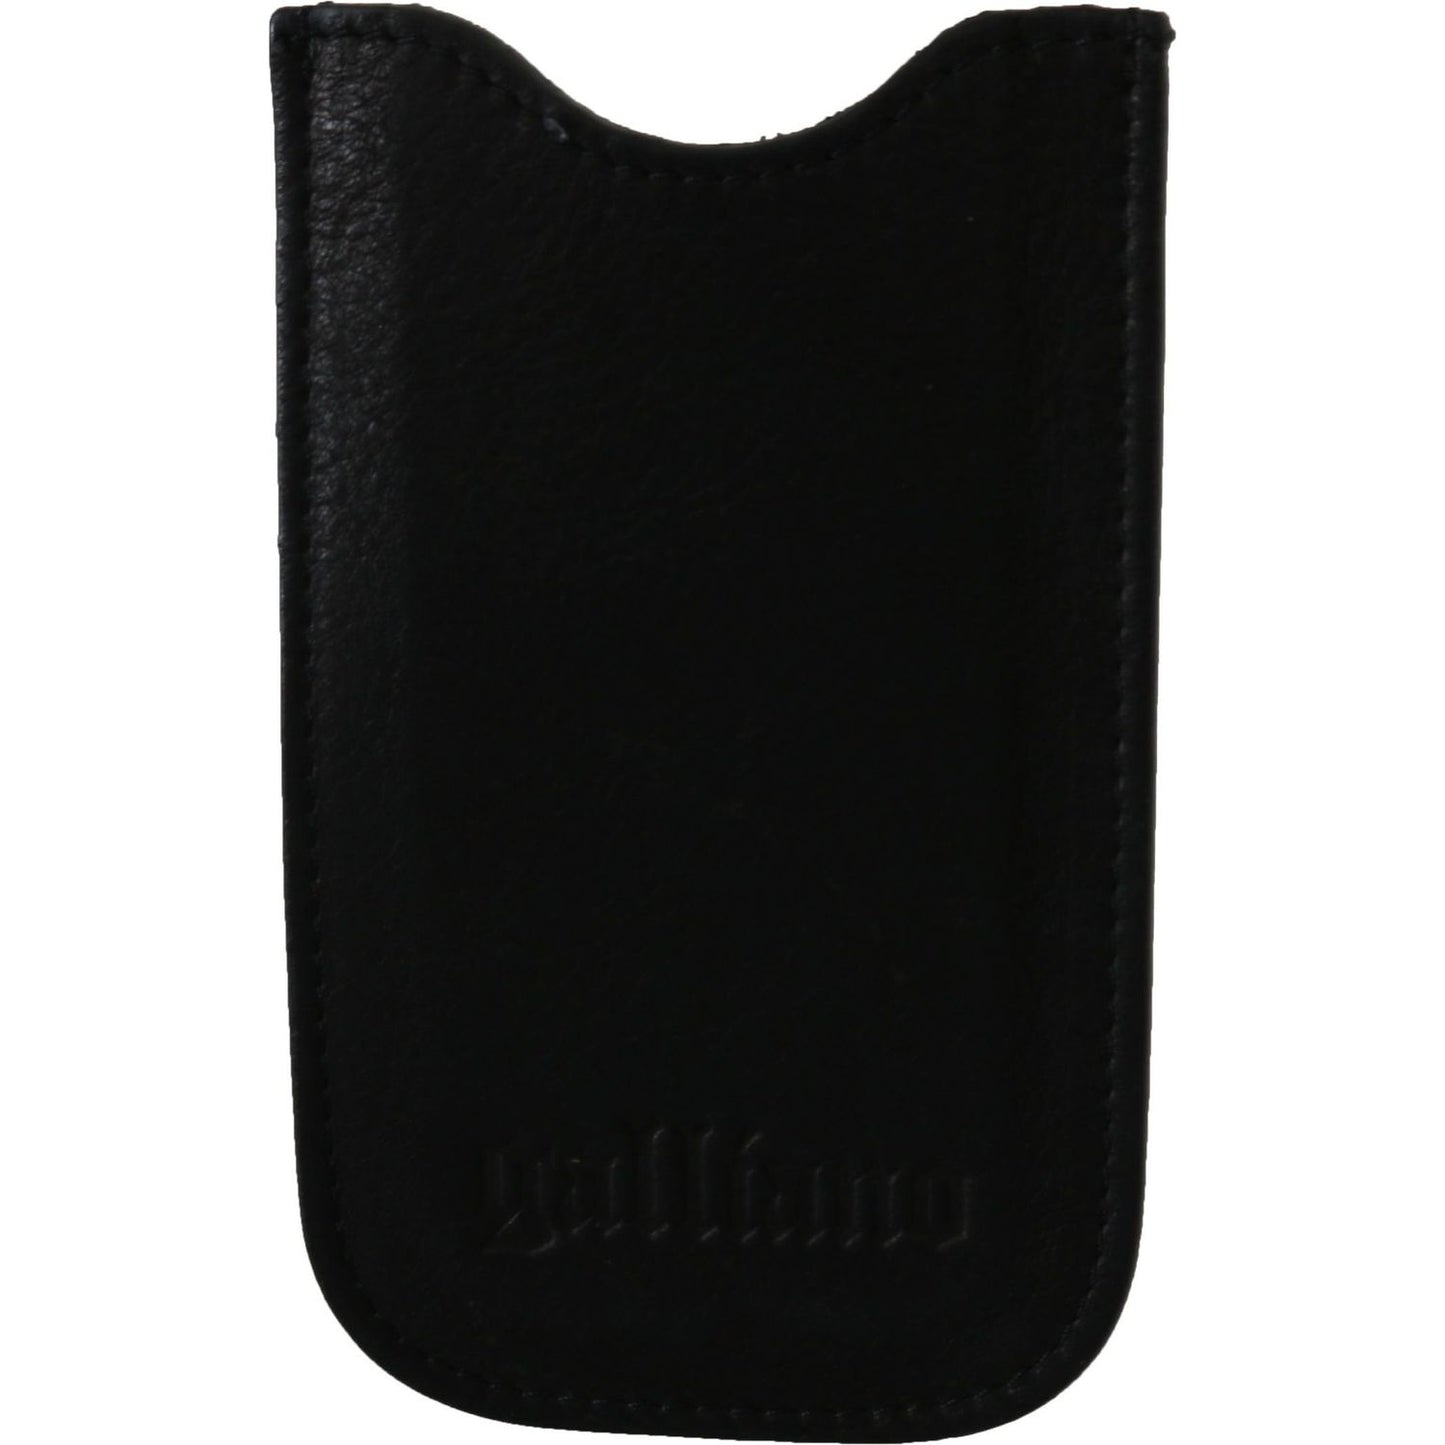 John Galliano Elegant Black Genuine Leather Men's Wallet Wallet black-leather-multifunctional-men-id-bill-card-holder-wallet